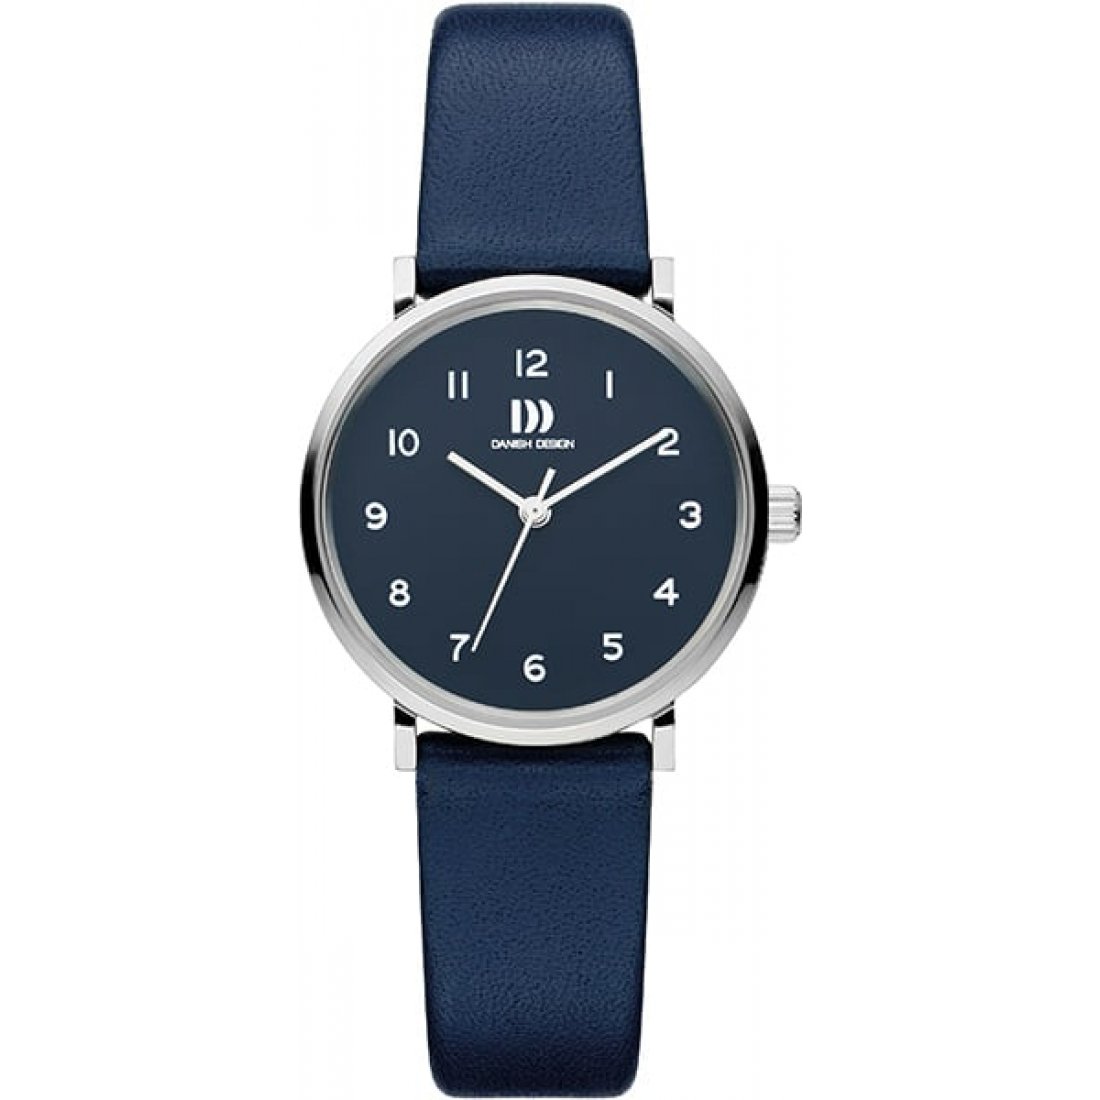 GLØBE Yukon Silver Blue Small Watch / Anny van Buul Juweliers Horloges